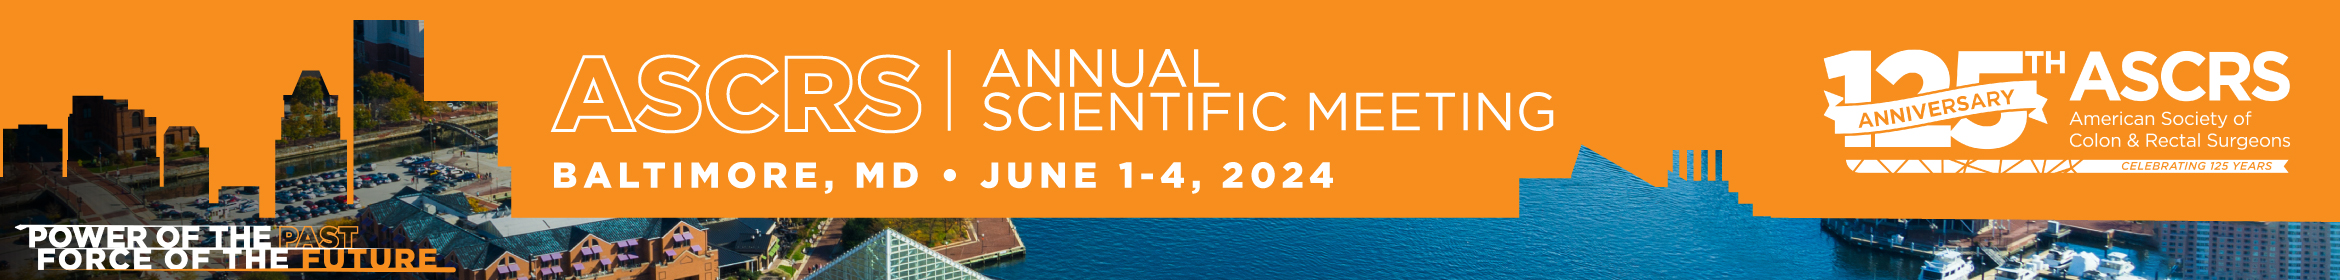 2024 ASCRS Annual Scientific Meeting Main banner